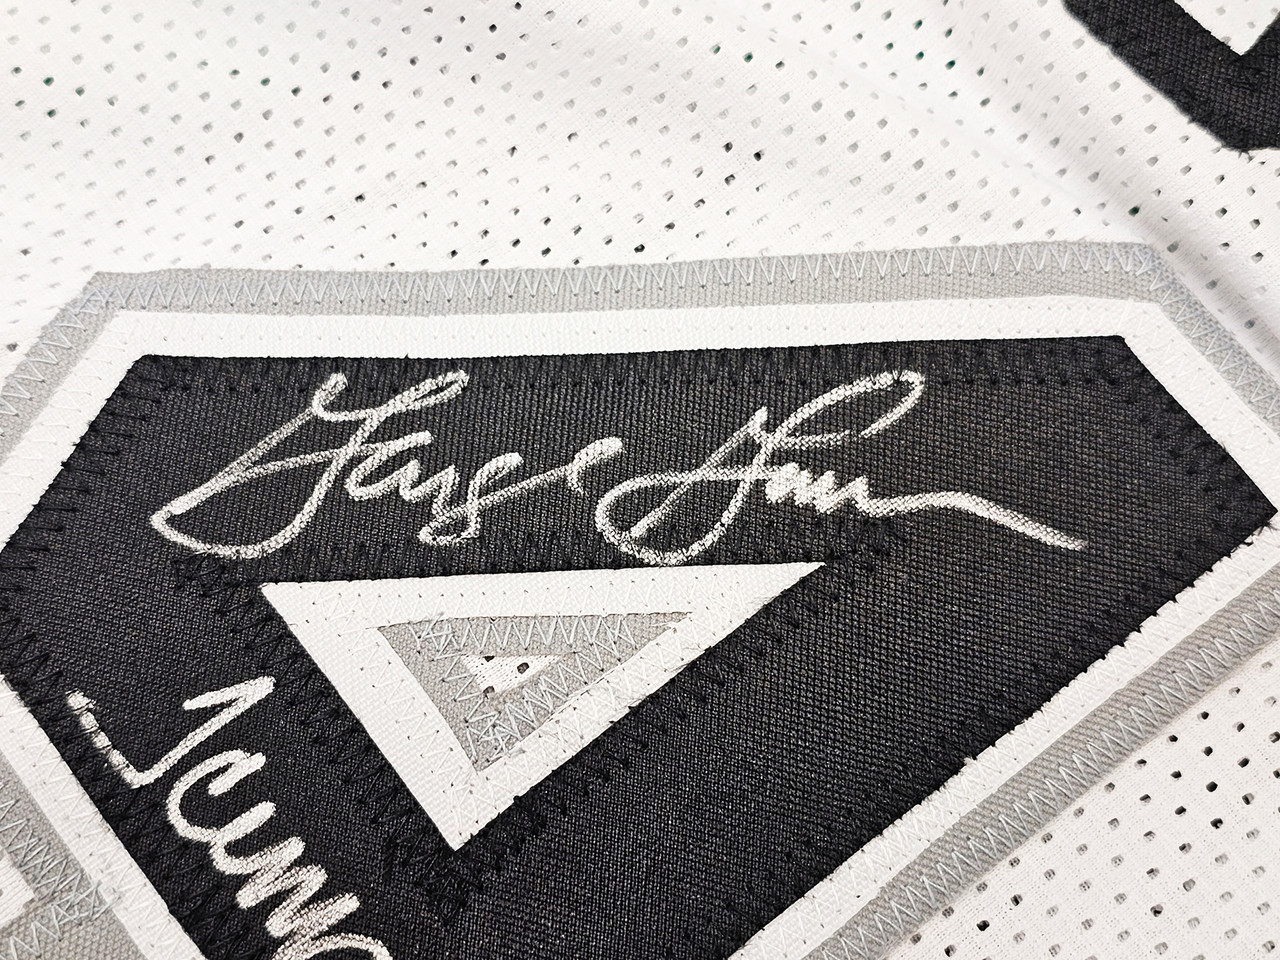 George Gervin Signed San Antonio Spurs Photo Jersey Inscribed HOF 96 –